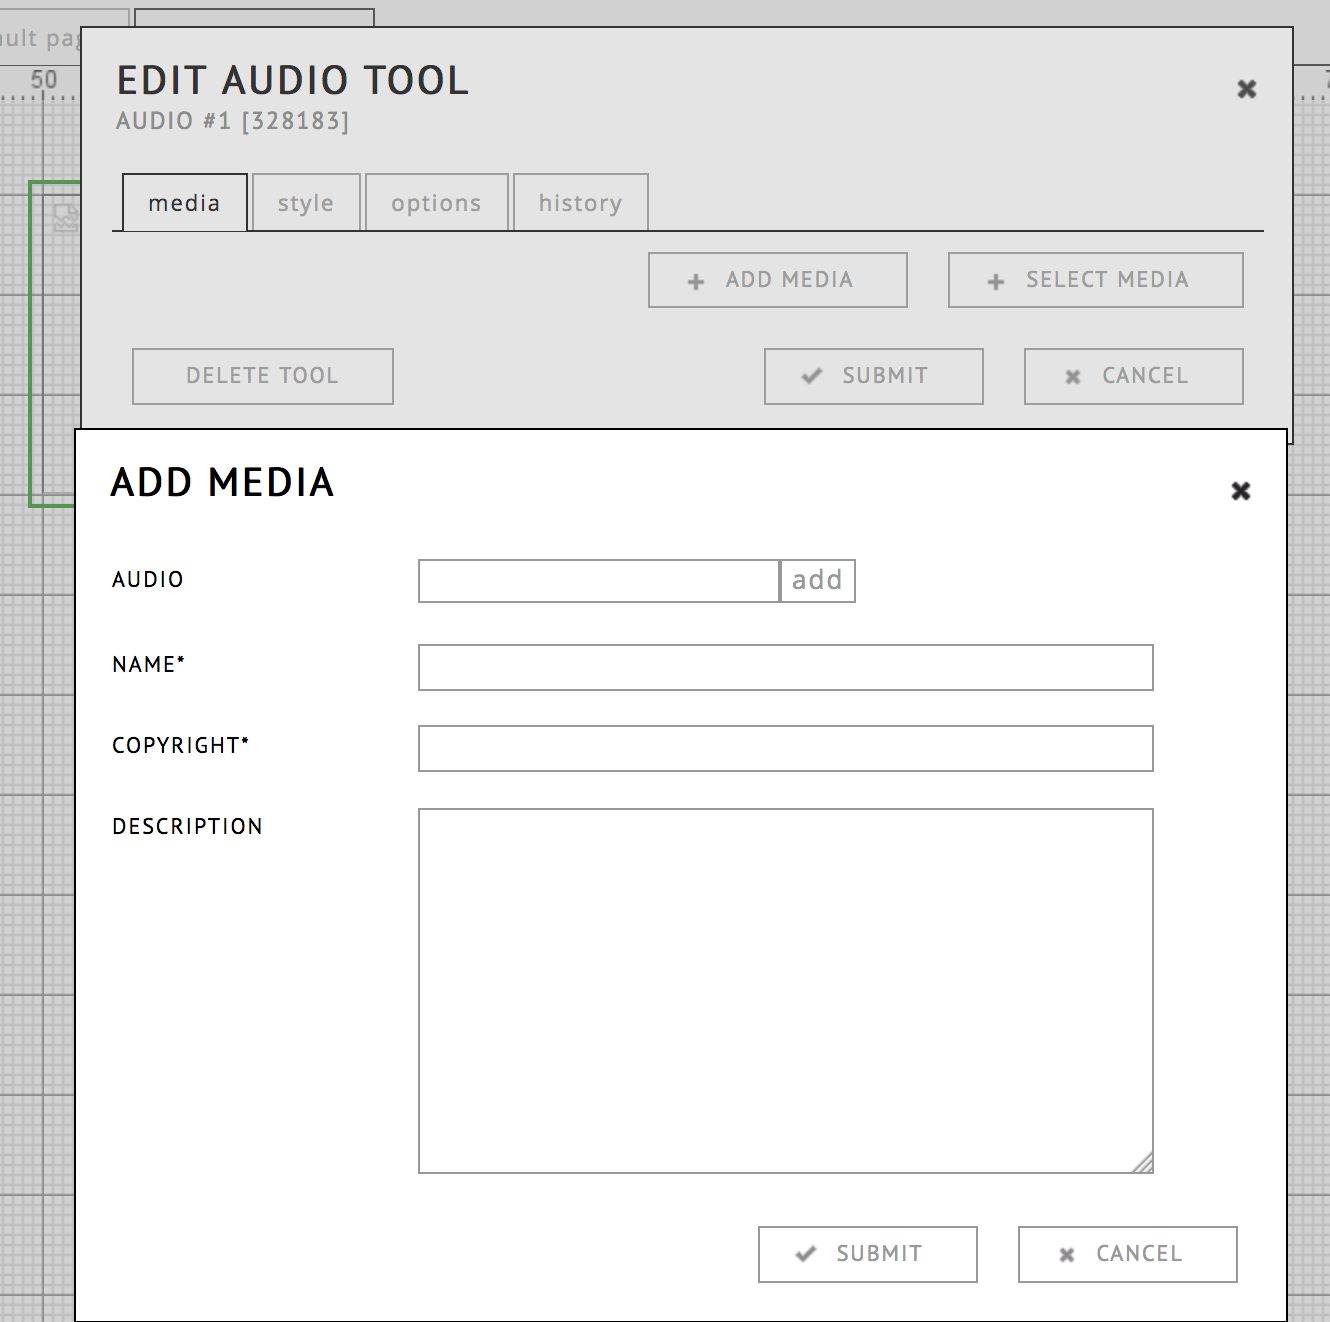 Audio tool upload dialog